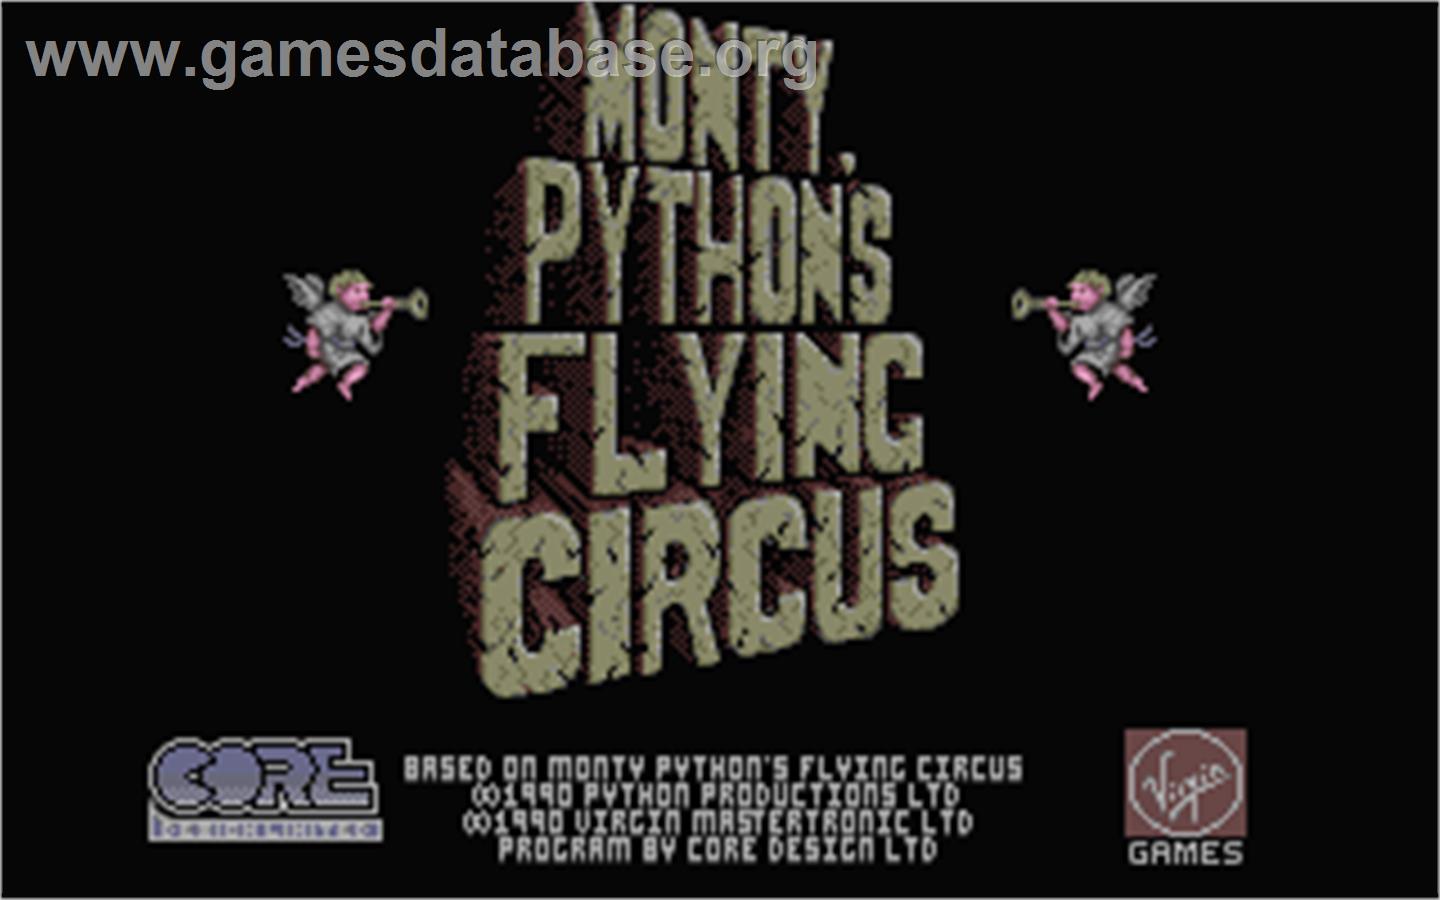 Monty Python's Flying Circus - Atari ST - Artwork - Title Screen